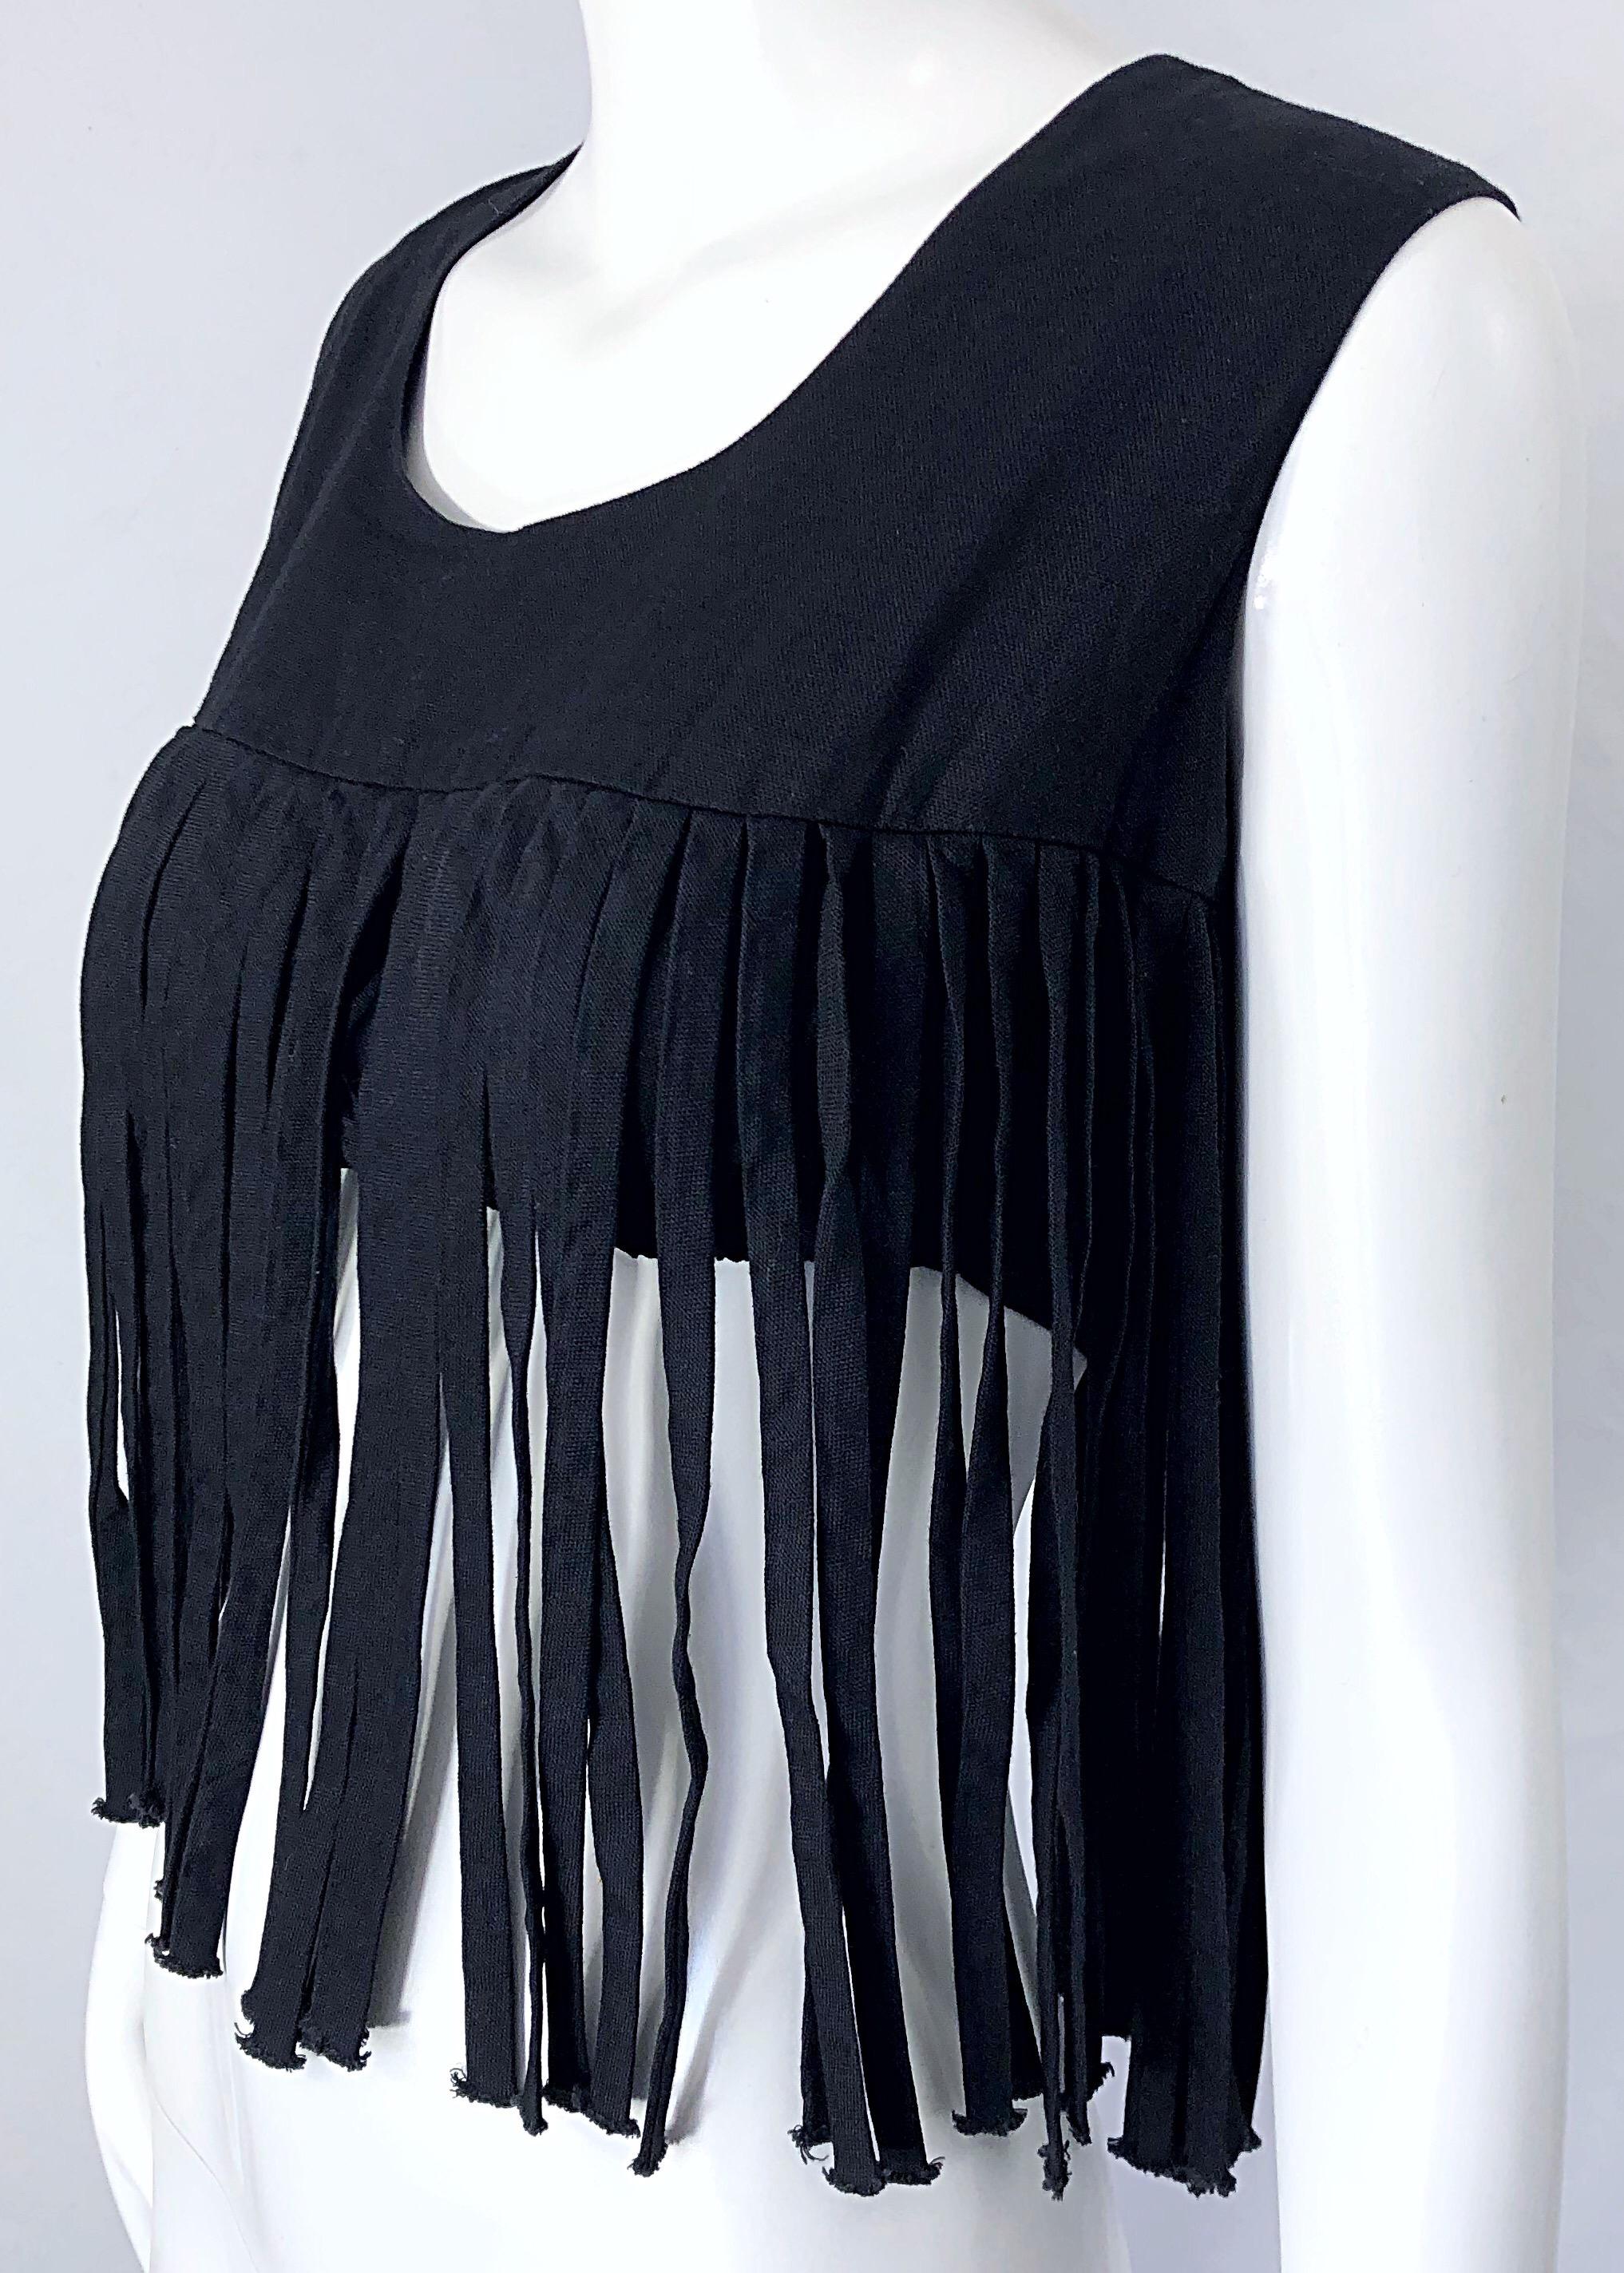 1970s Black Linen Fringe Vintage Boho Chic Festival 70s Crop Top Shirt Blouse For Sale 2